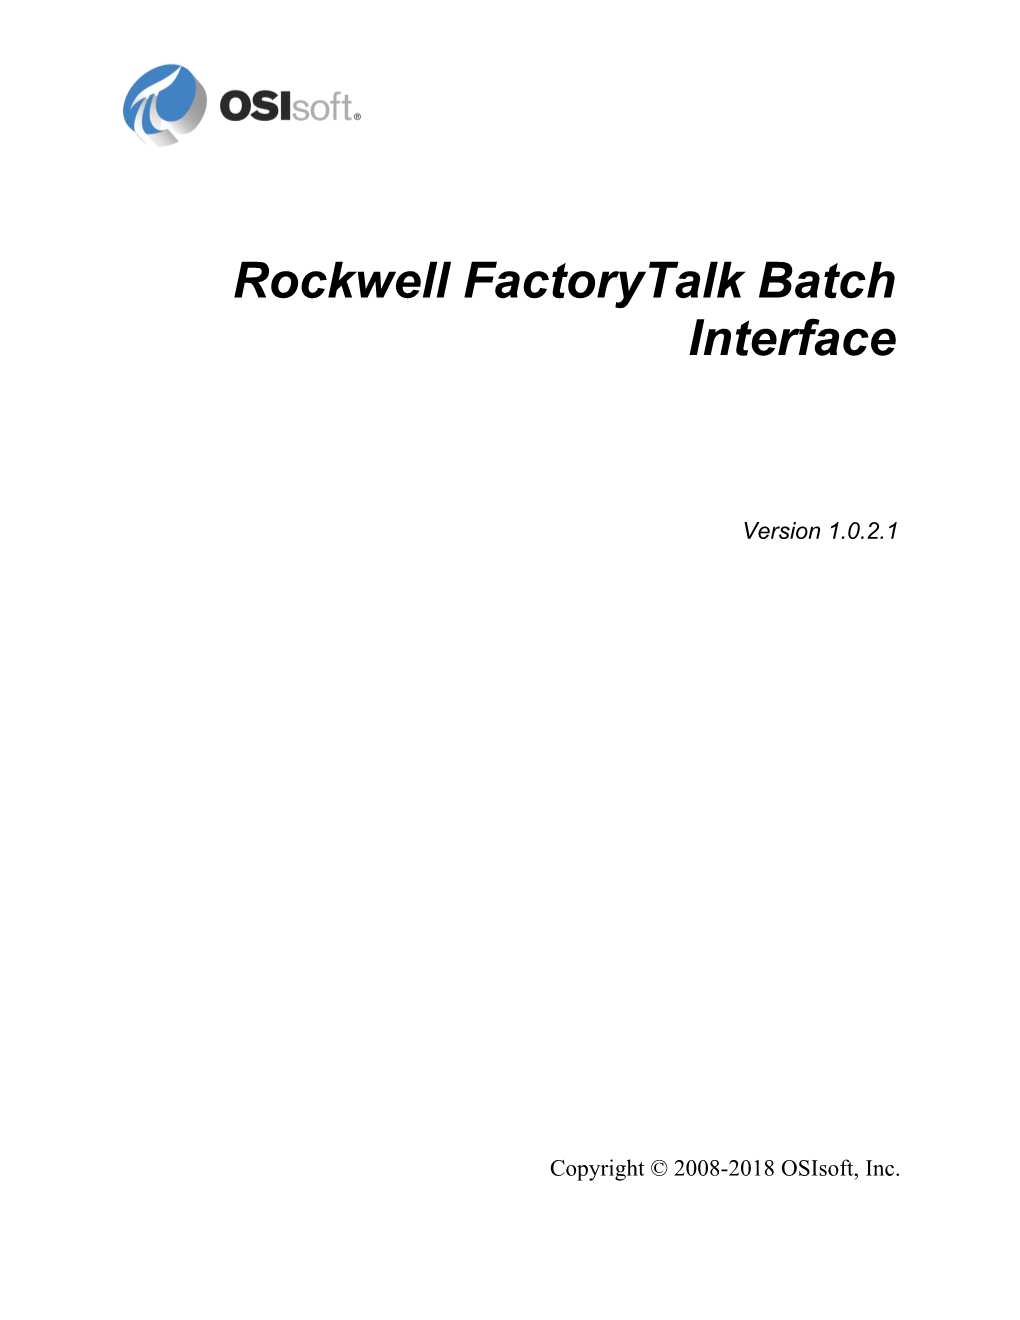 Rockwell Factorytalk Batch Interface